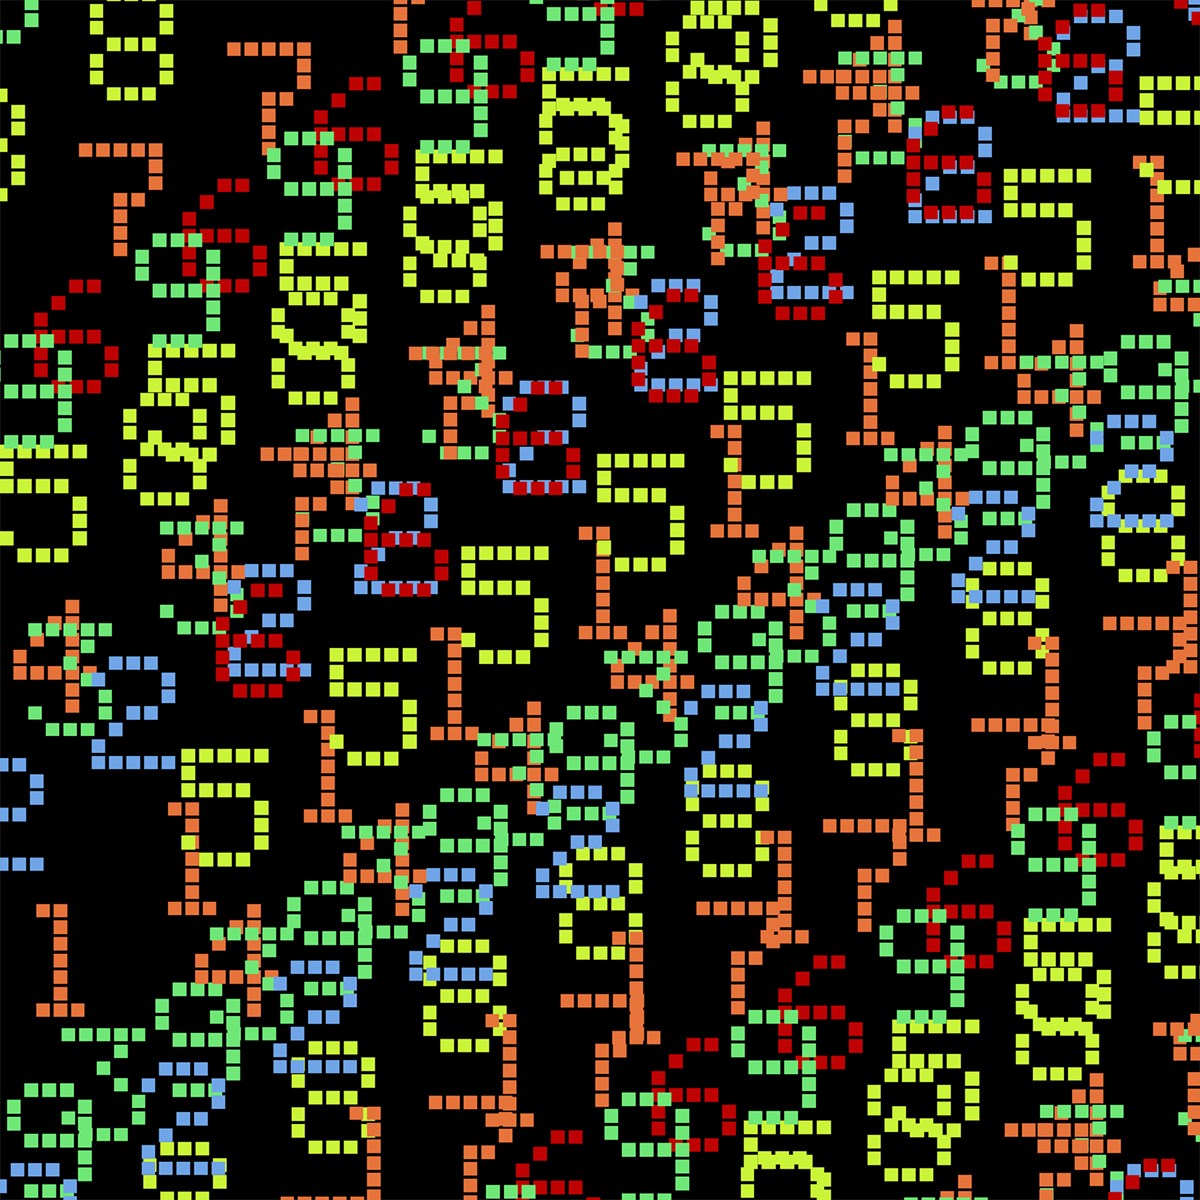 Multi colored digital numbers arranged in diagonal rows